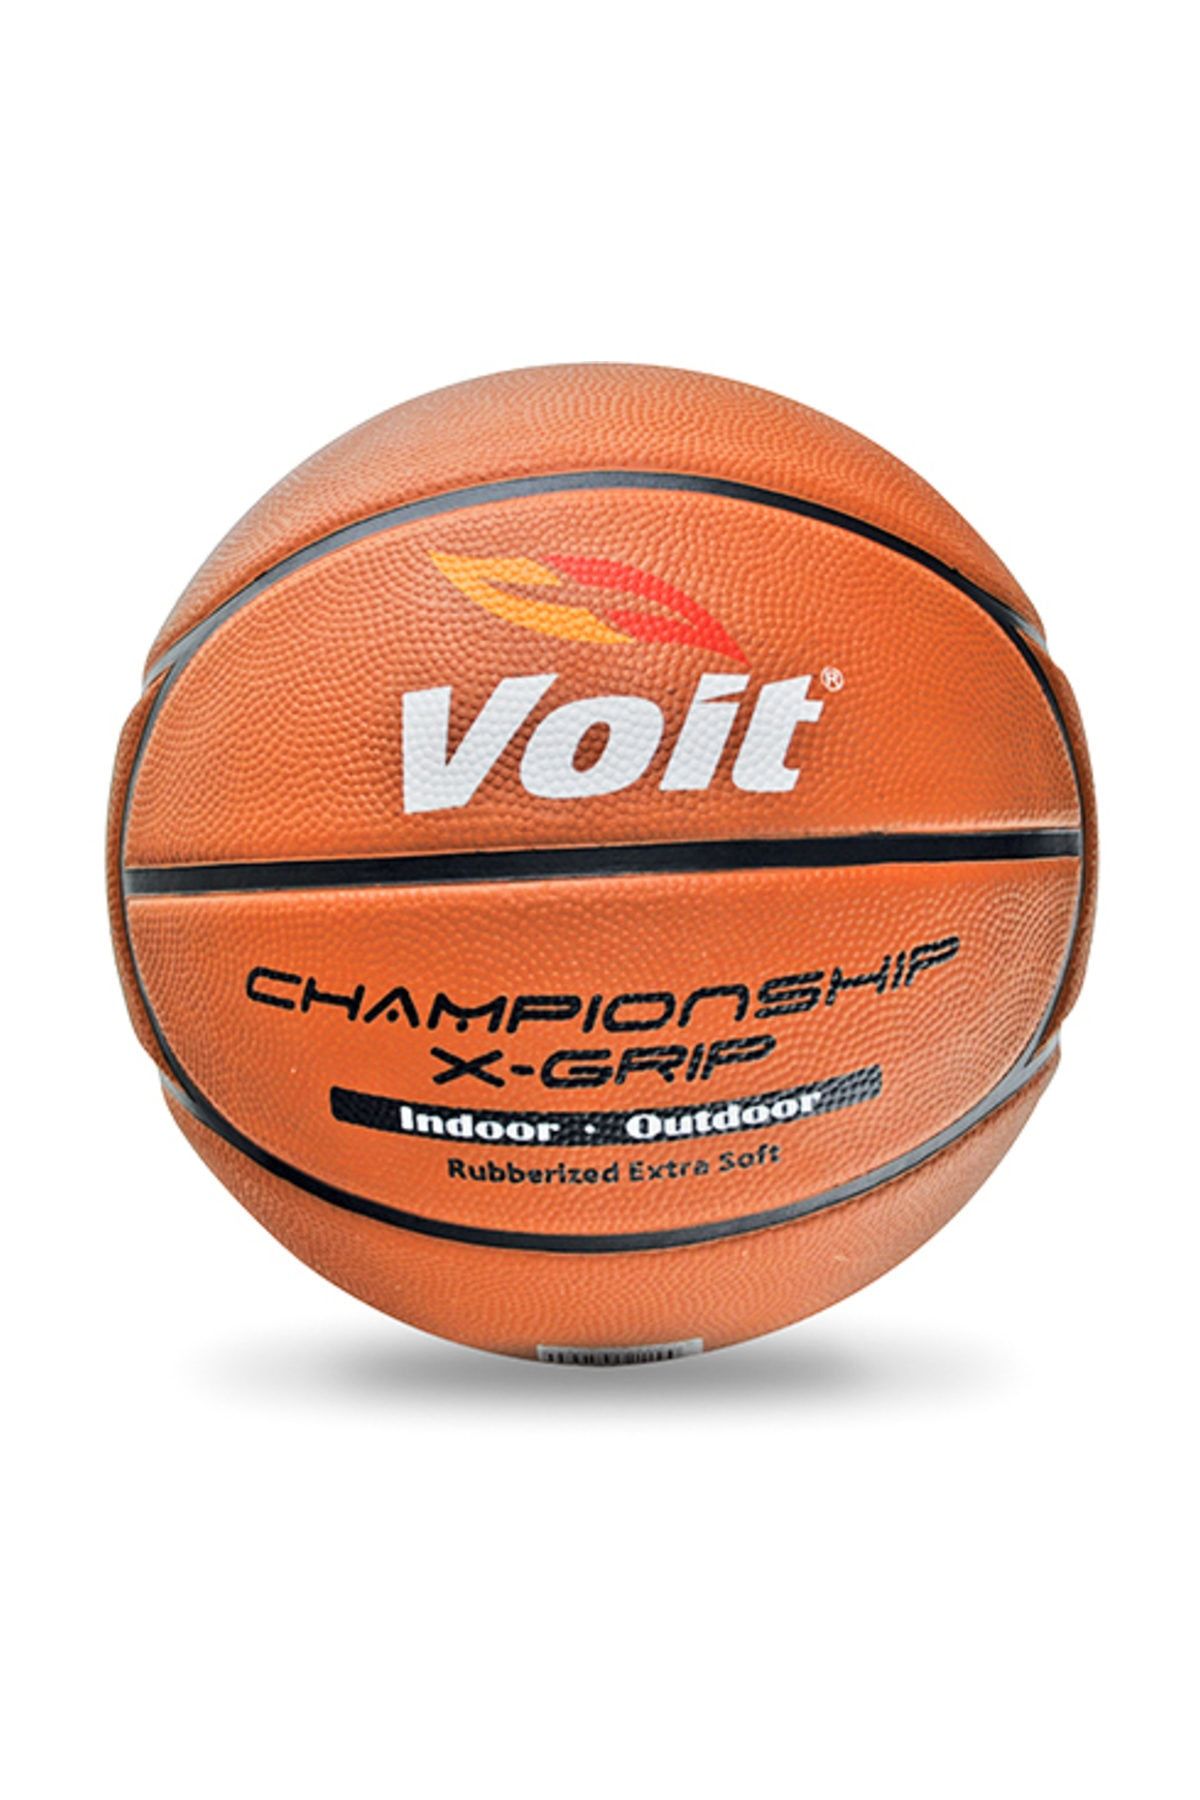 Voit Xgrıp Basketbol Topu N:6/Kahve 1VTTPXGRIPN6/020